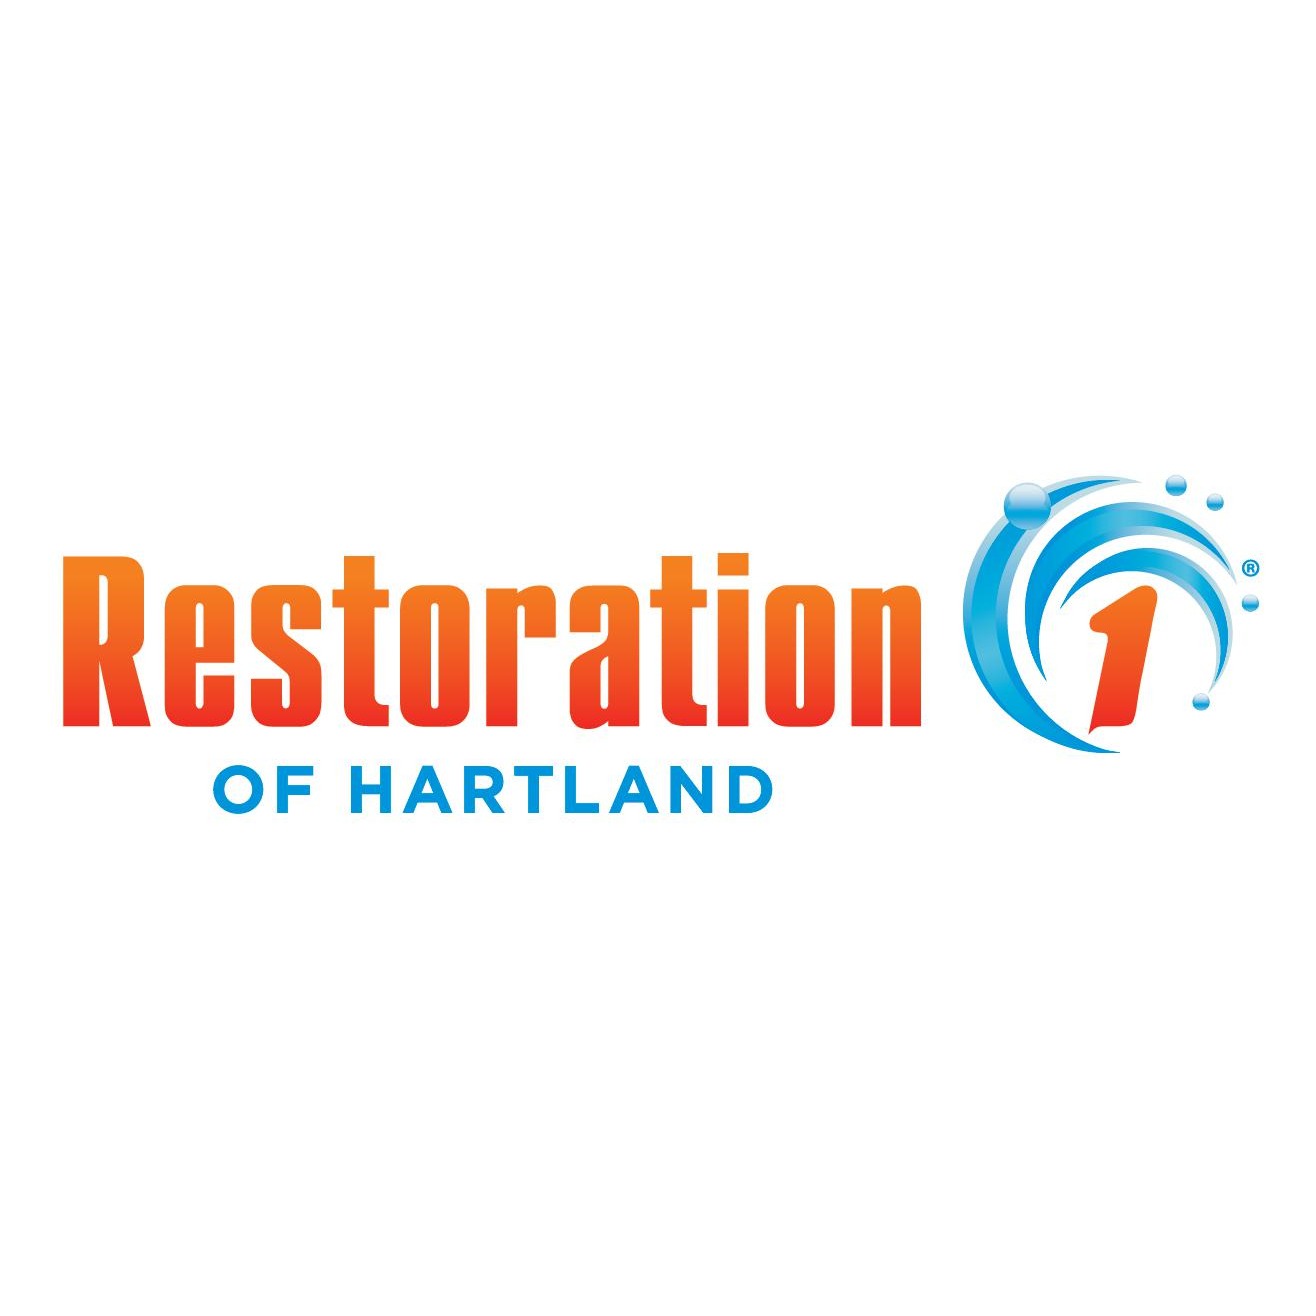 Restoration 1 of Hartland